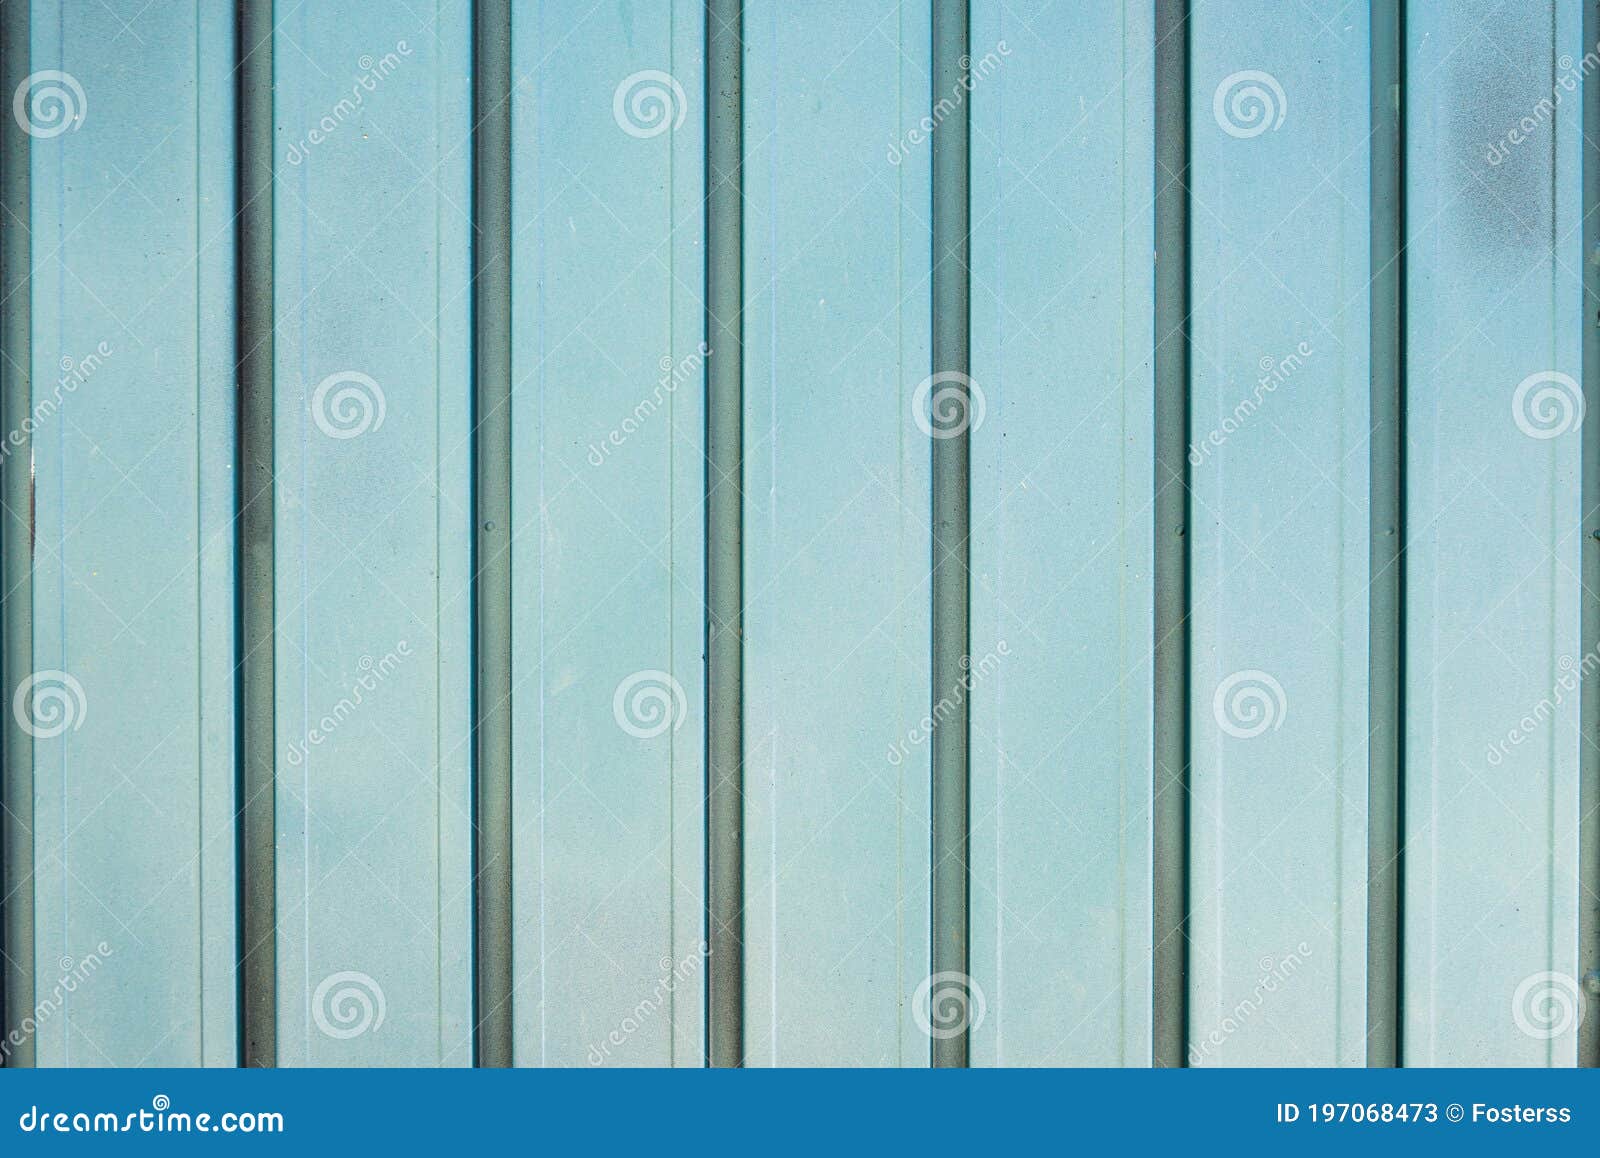 background of blue metal door in grungy style